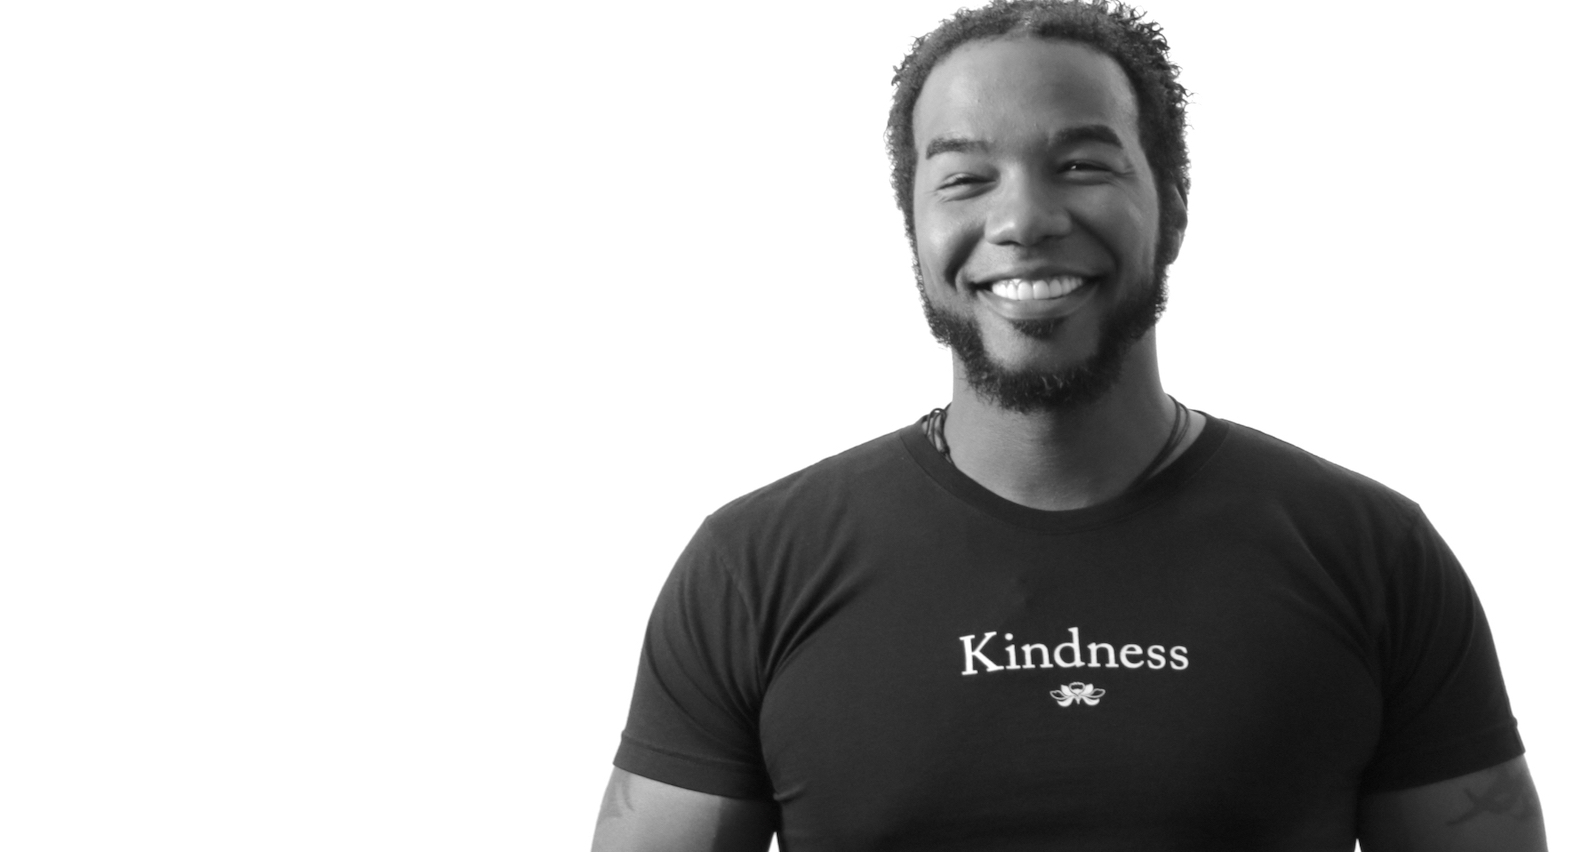 Man wearing black Kindness t-shirt